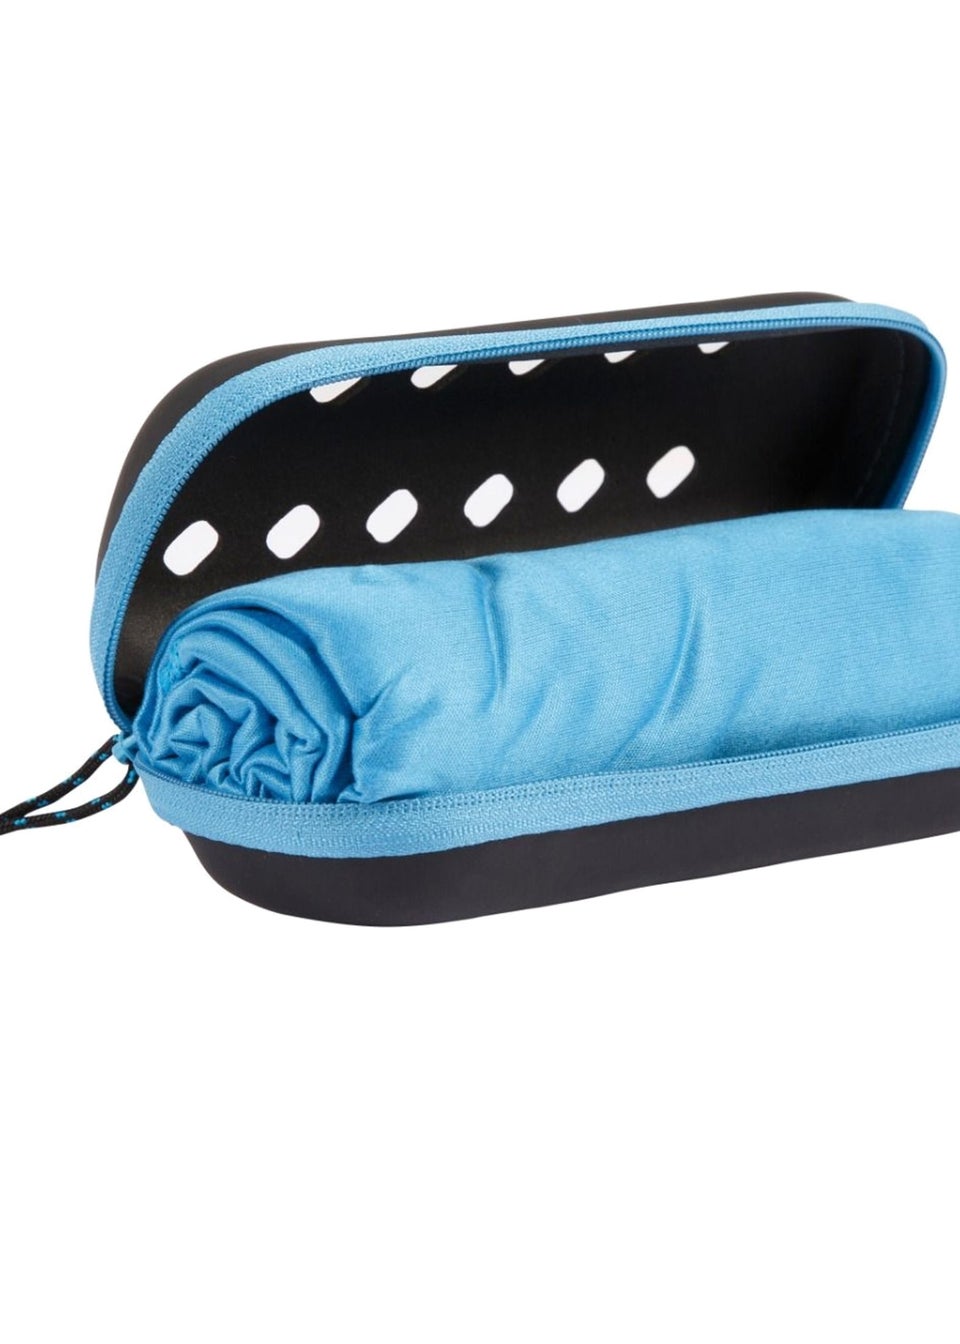 Trespass Blue Compatto Dryfast Towel